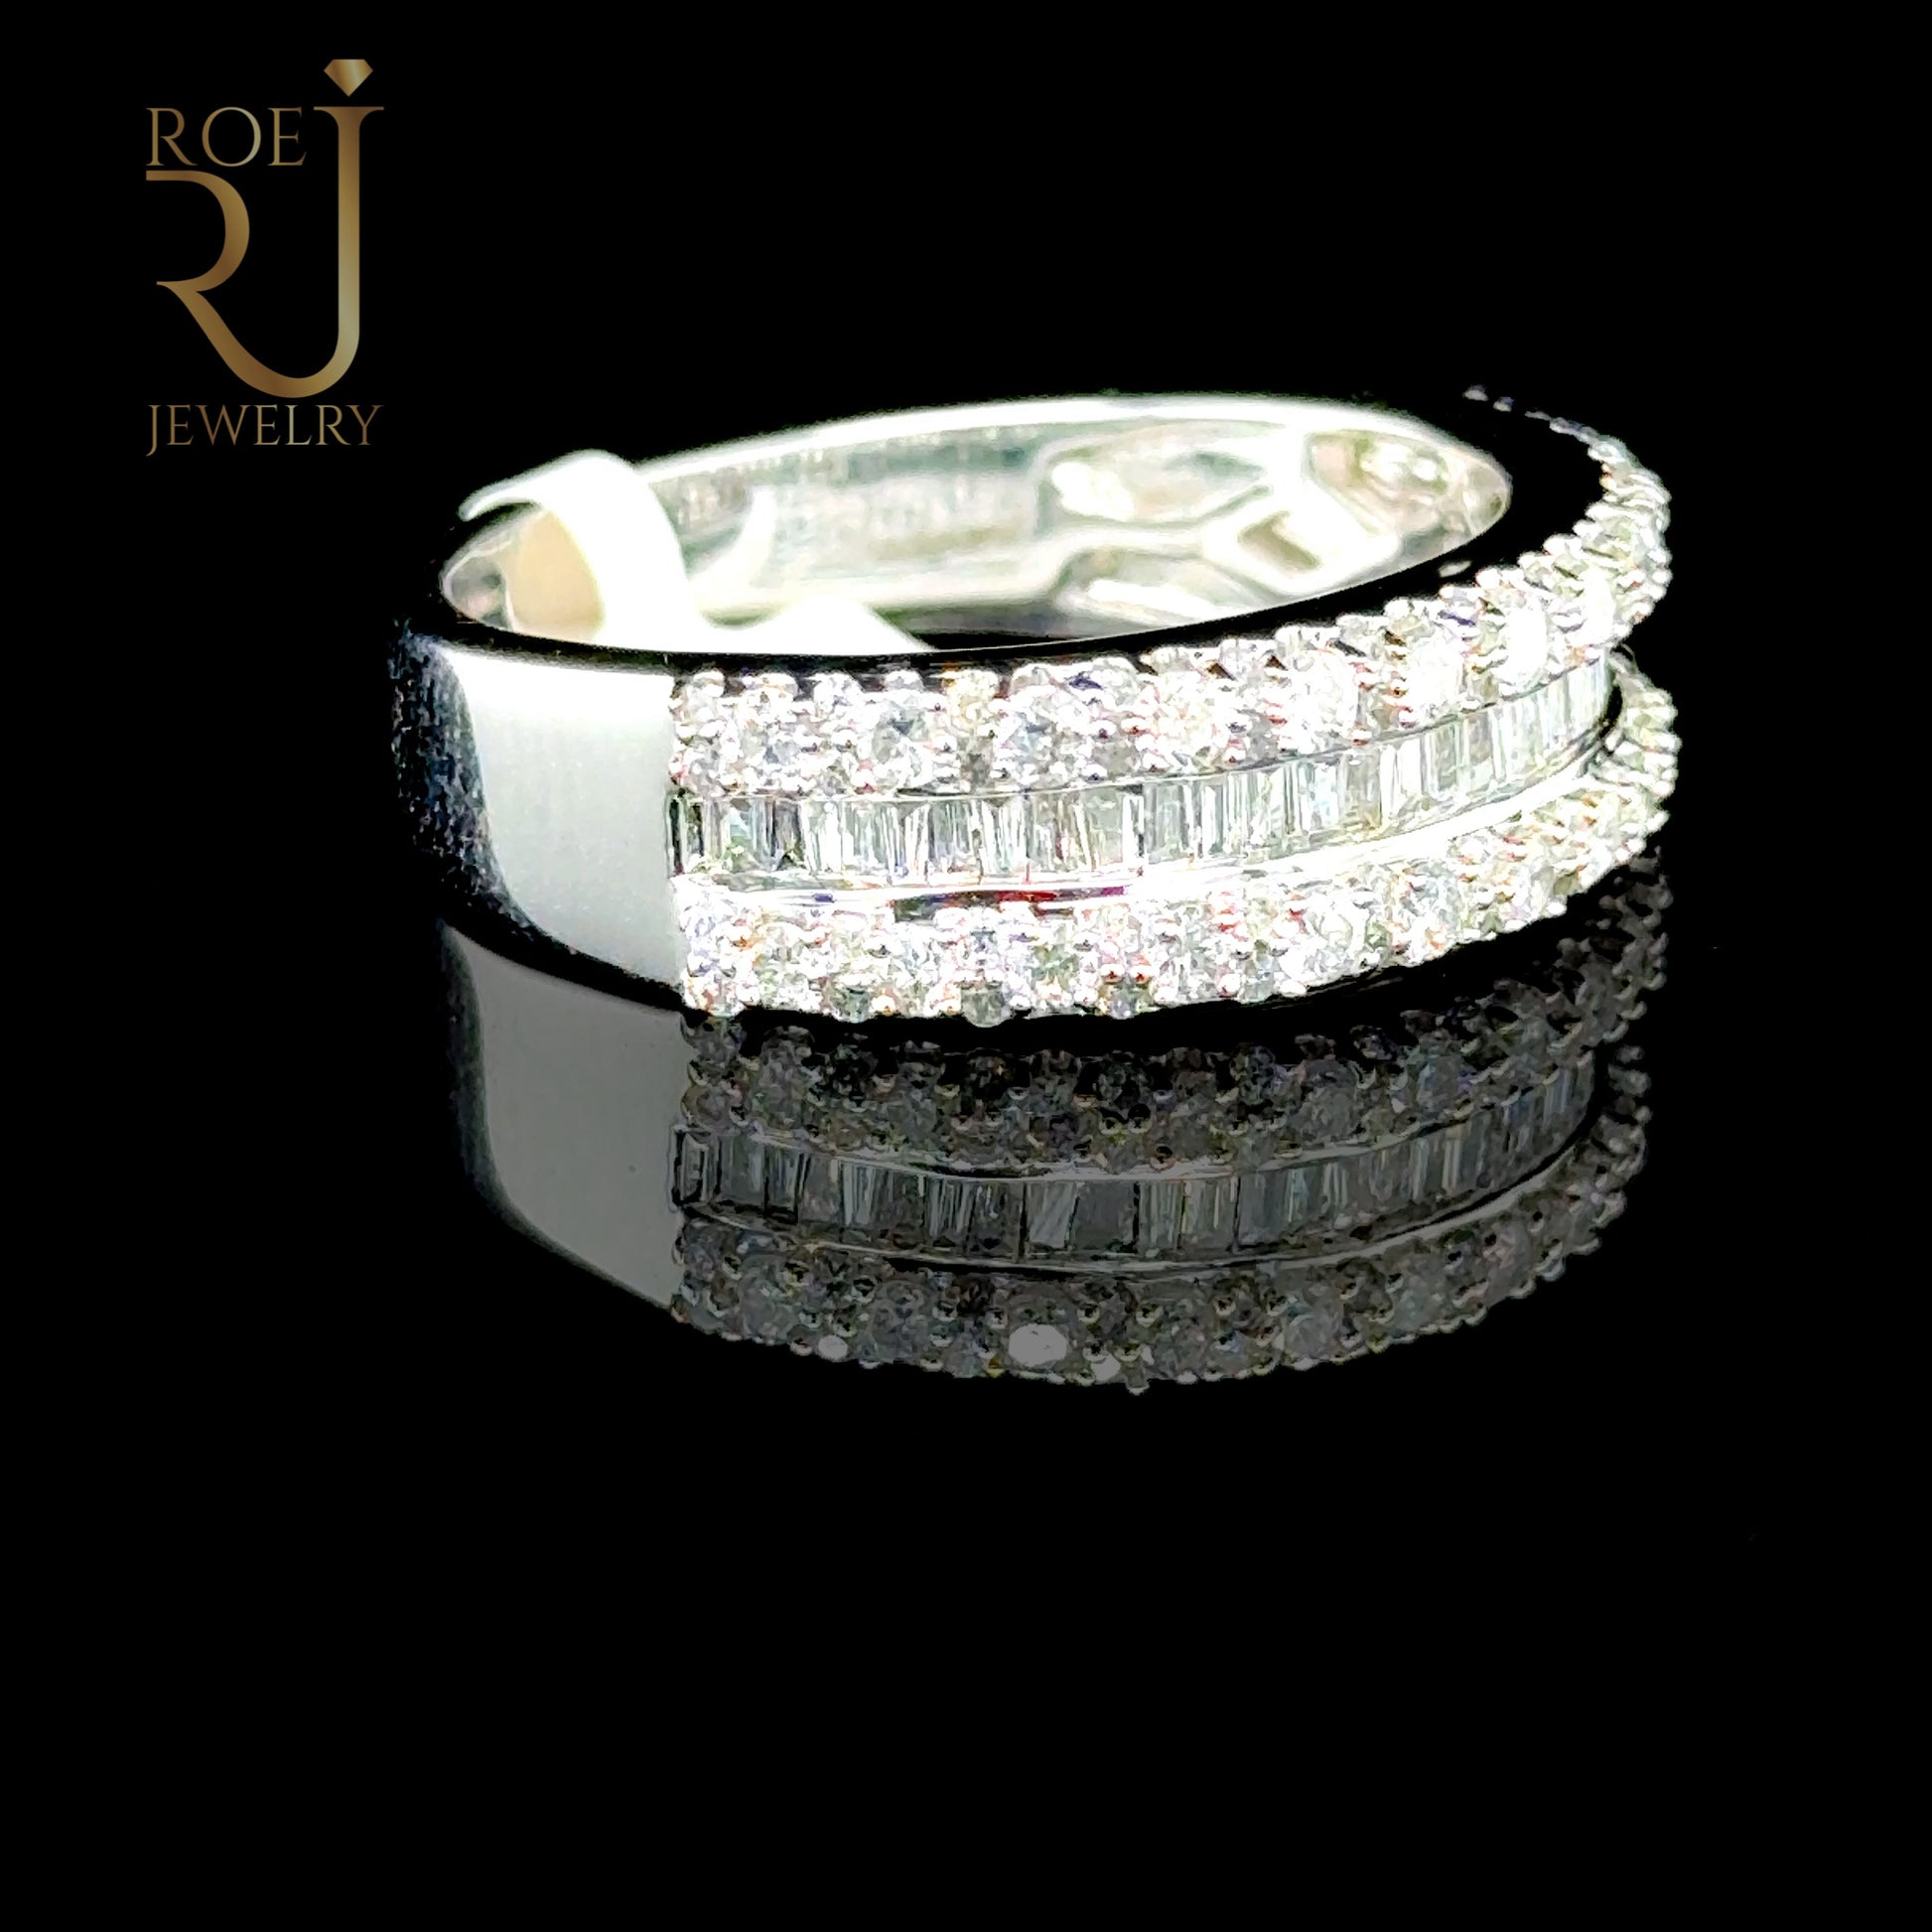 Stunning 1.15ct Diamond Ring in 14K White Gold